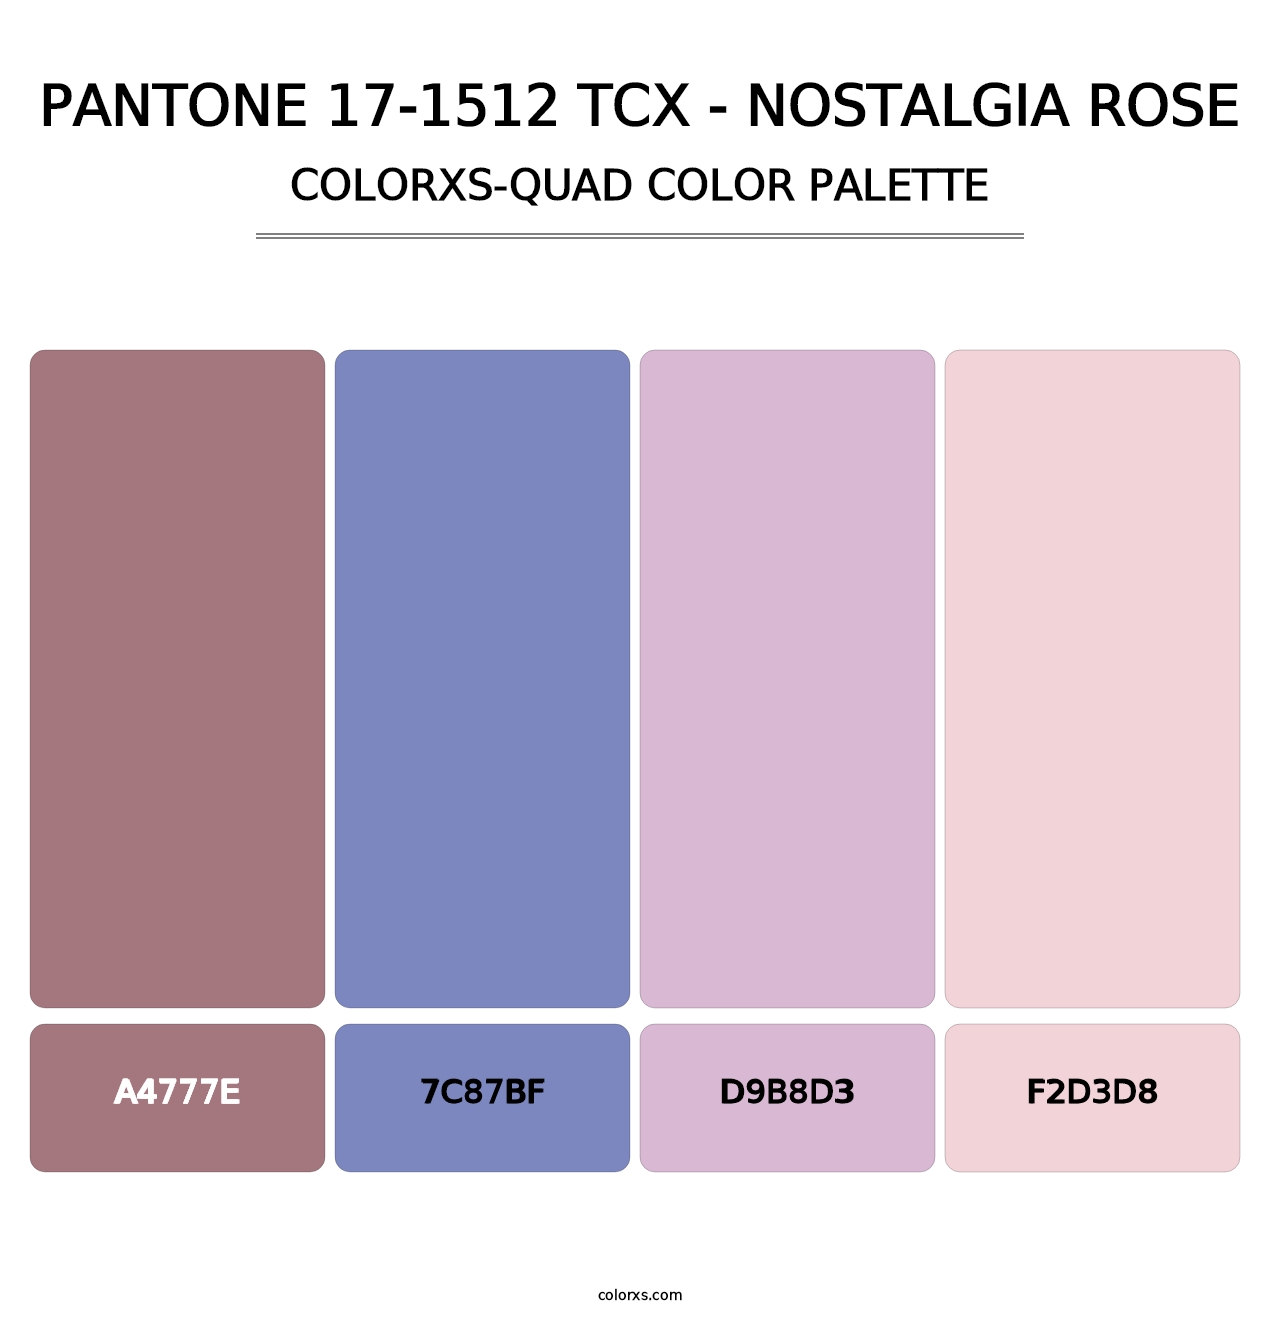 PANTONE 17-1512 TCX - Nostalgia Rose - Colorxs Quad Palette